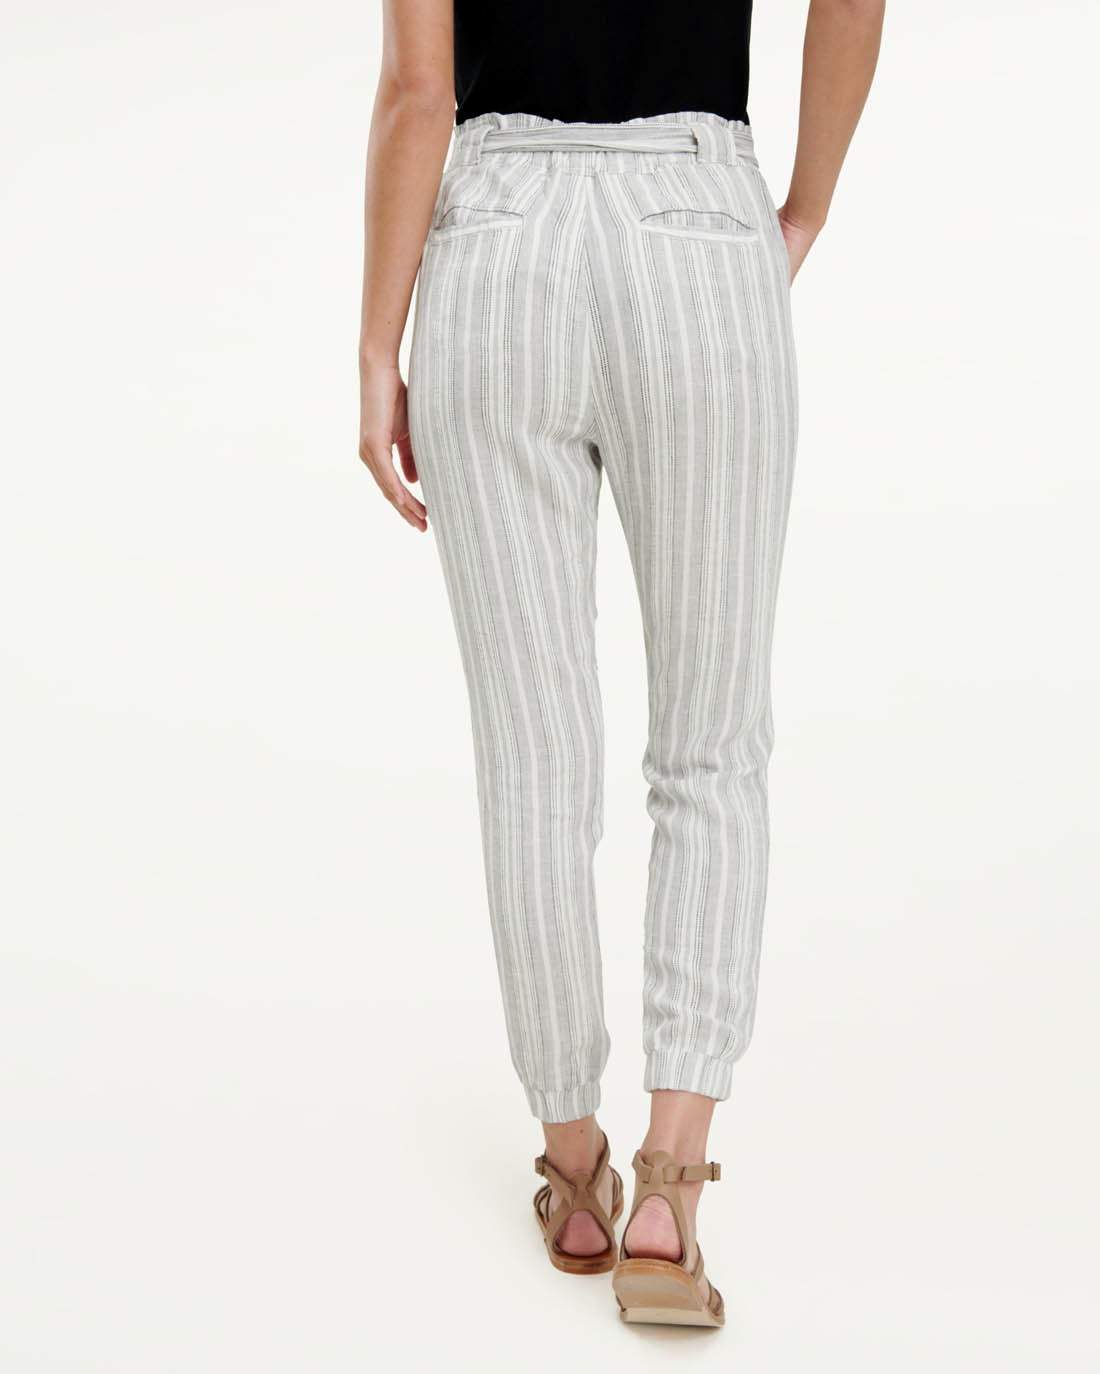 Splendid Bungalow Stripe pant | Basicality on Sale